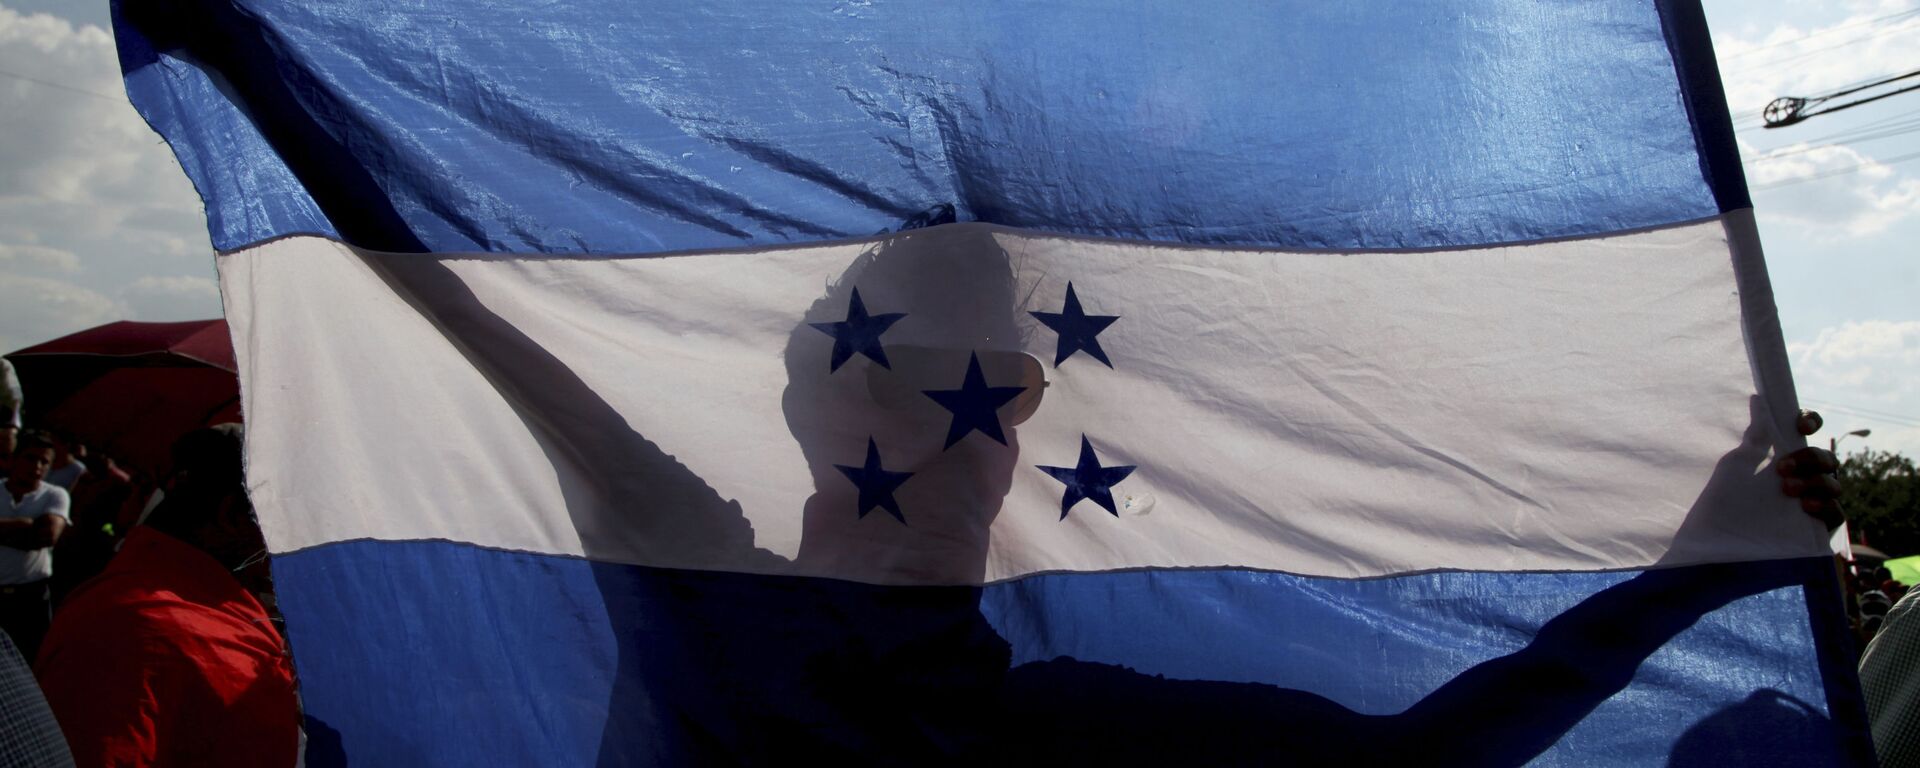 Bandera de Honduras - Sputnik Mundo, 1920, 26.04.2021